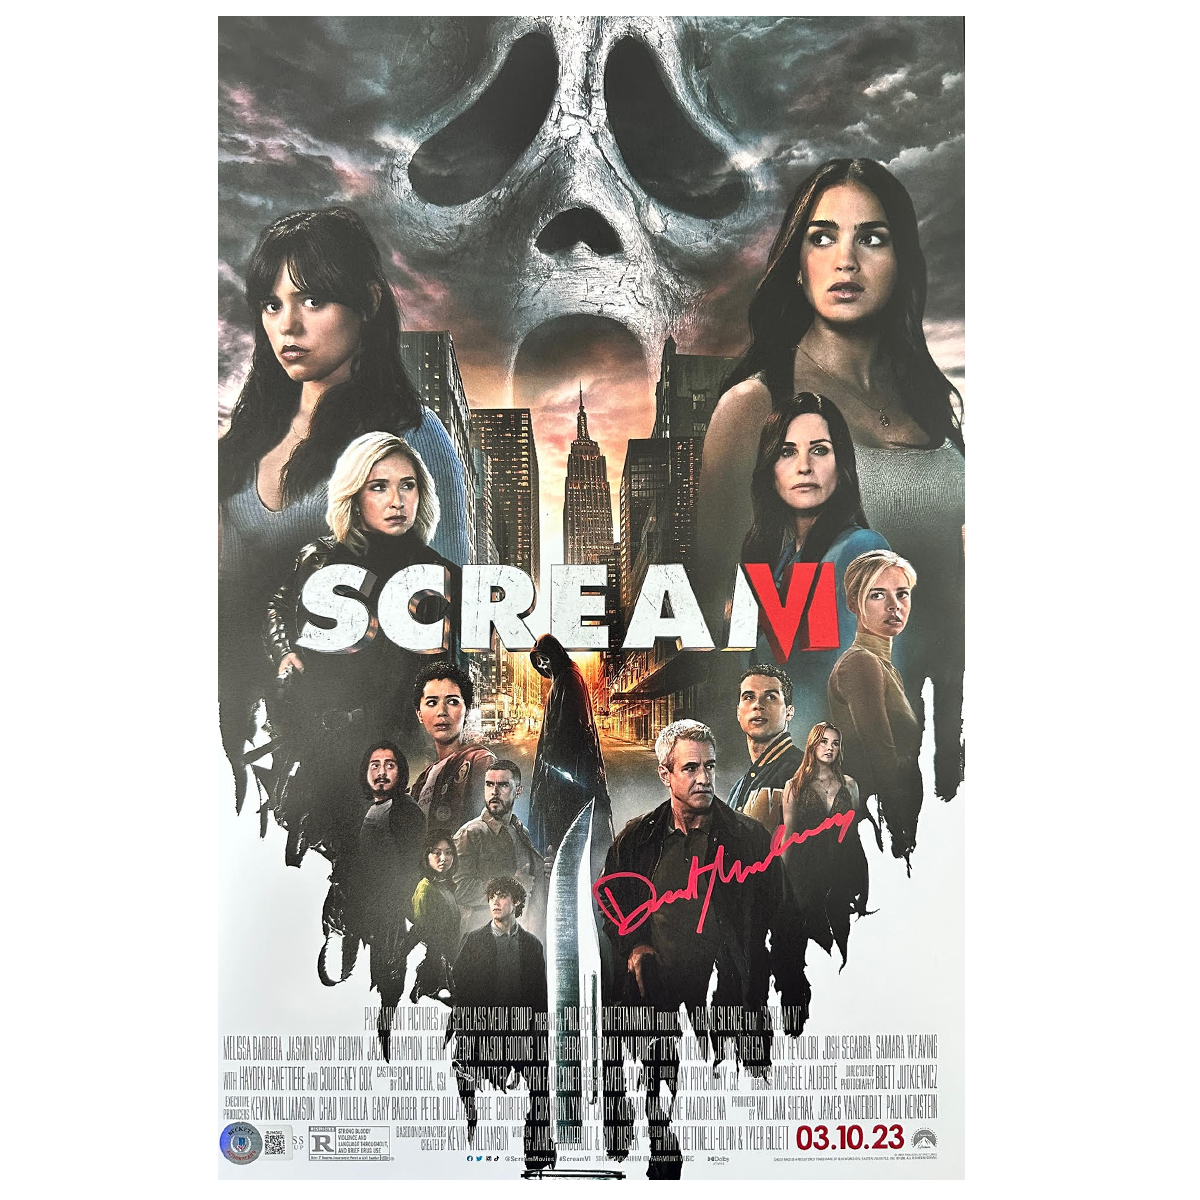 Dermot Mulroney Joins The Cast Of SCREAM 6